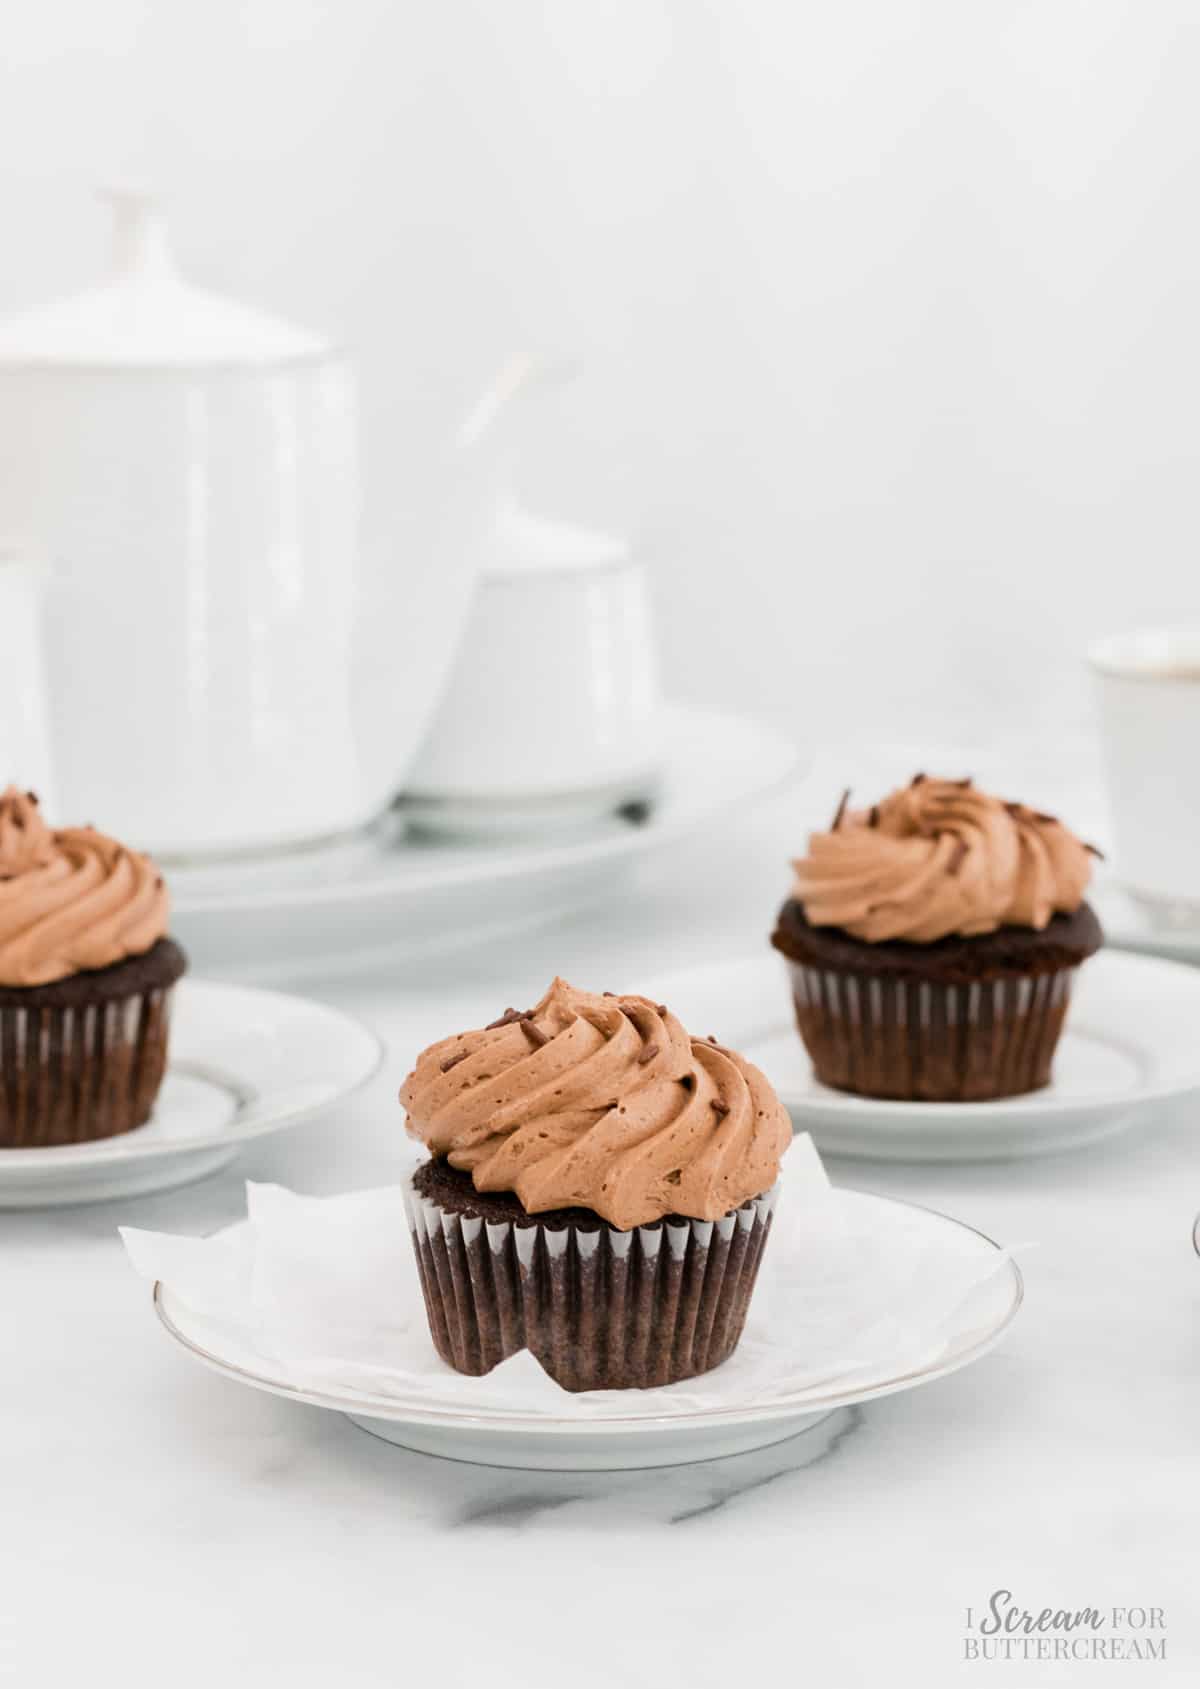 Image of three chocolate cupcakes on white plates.